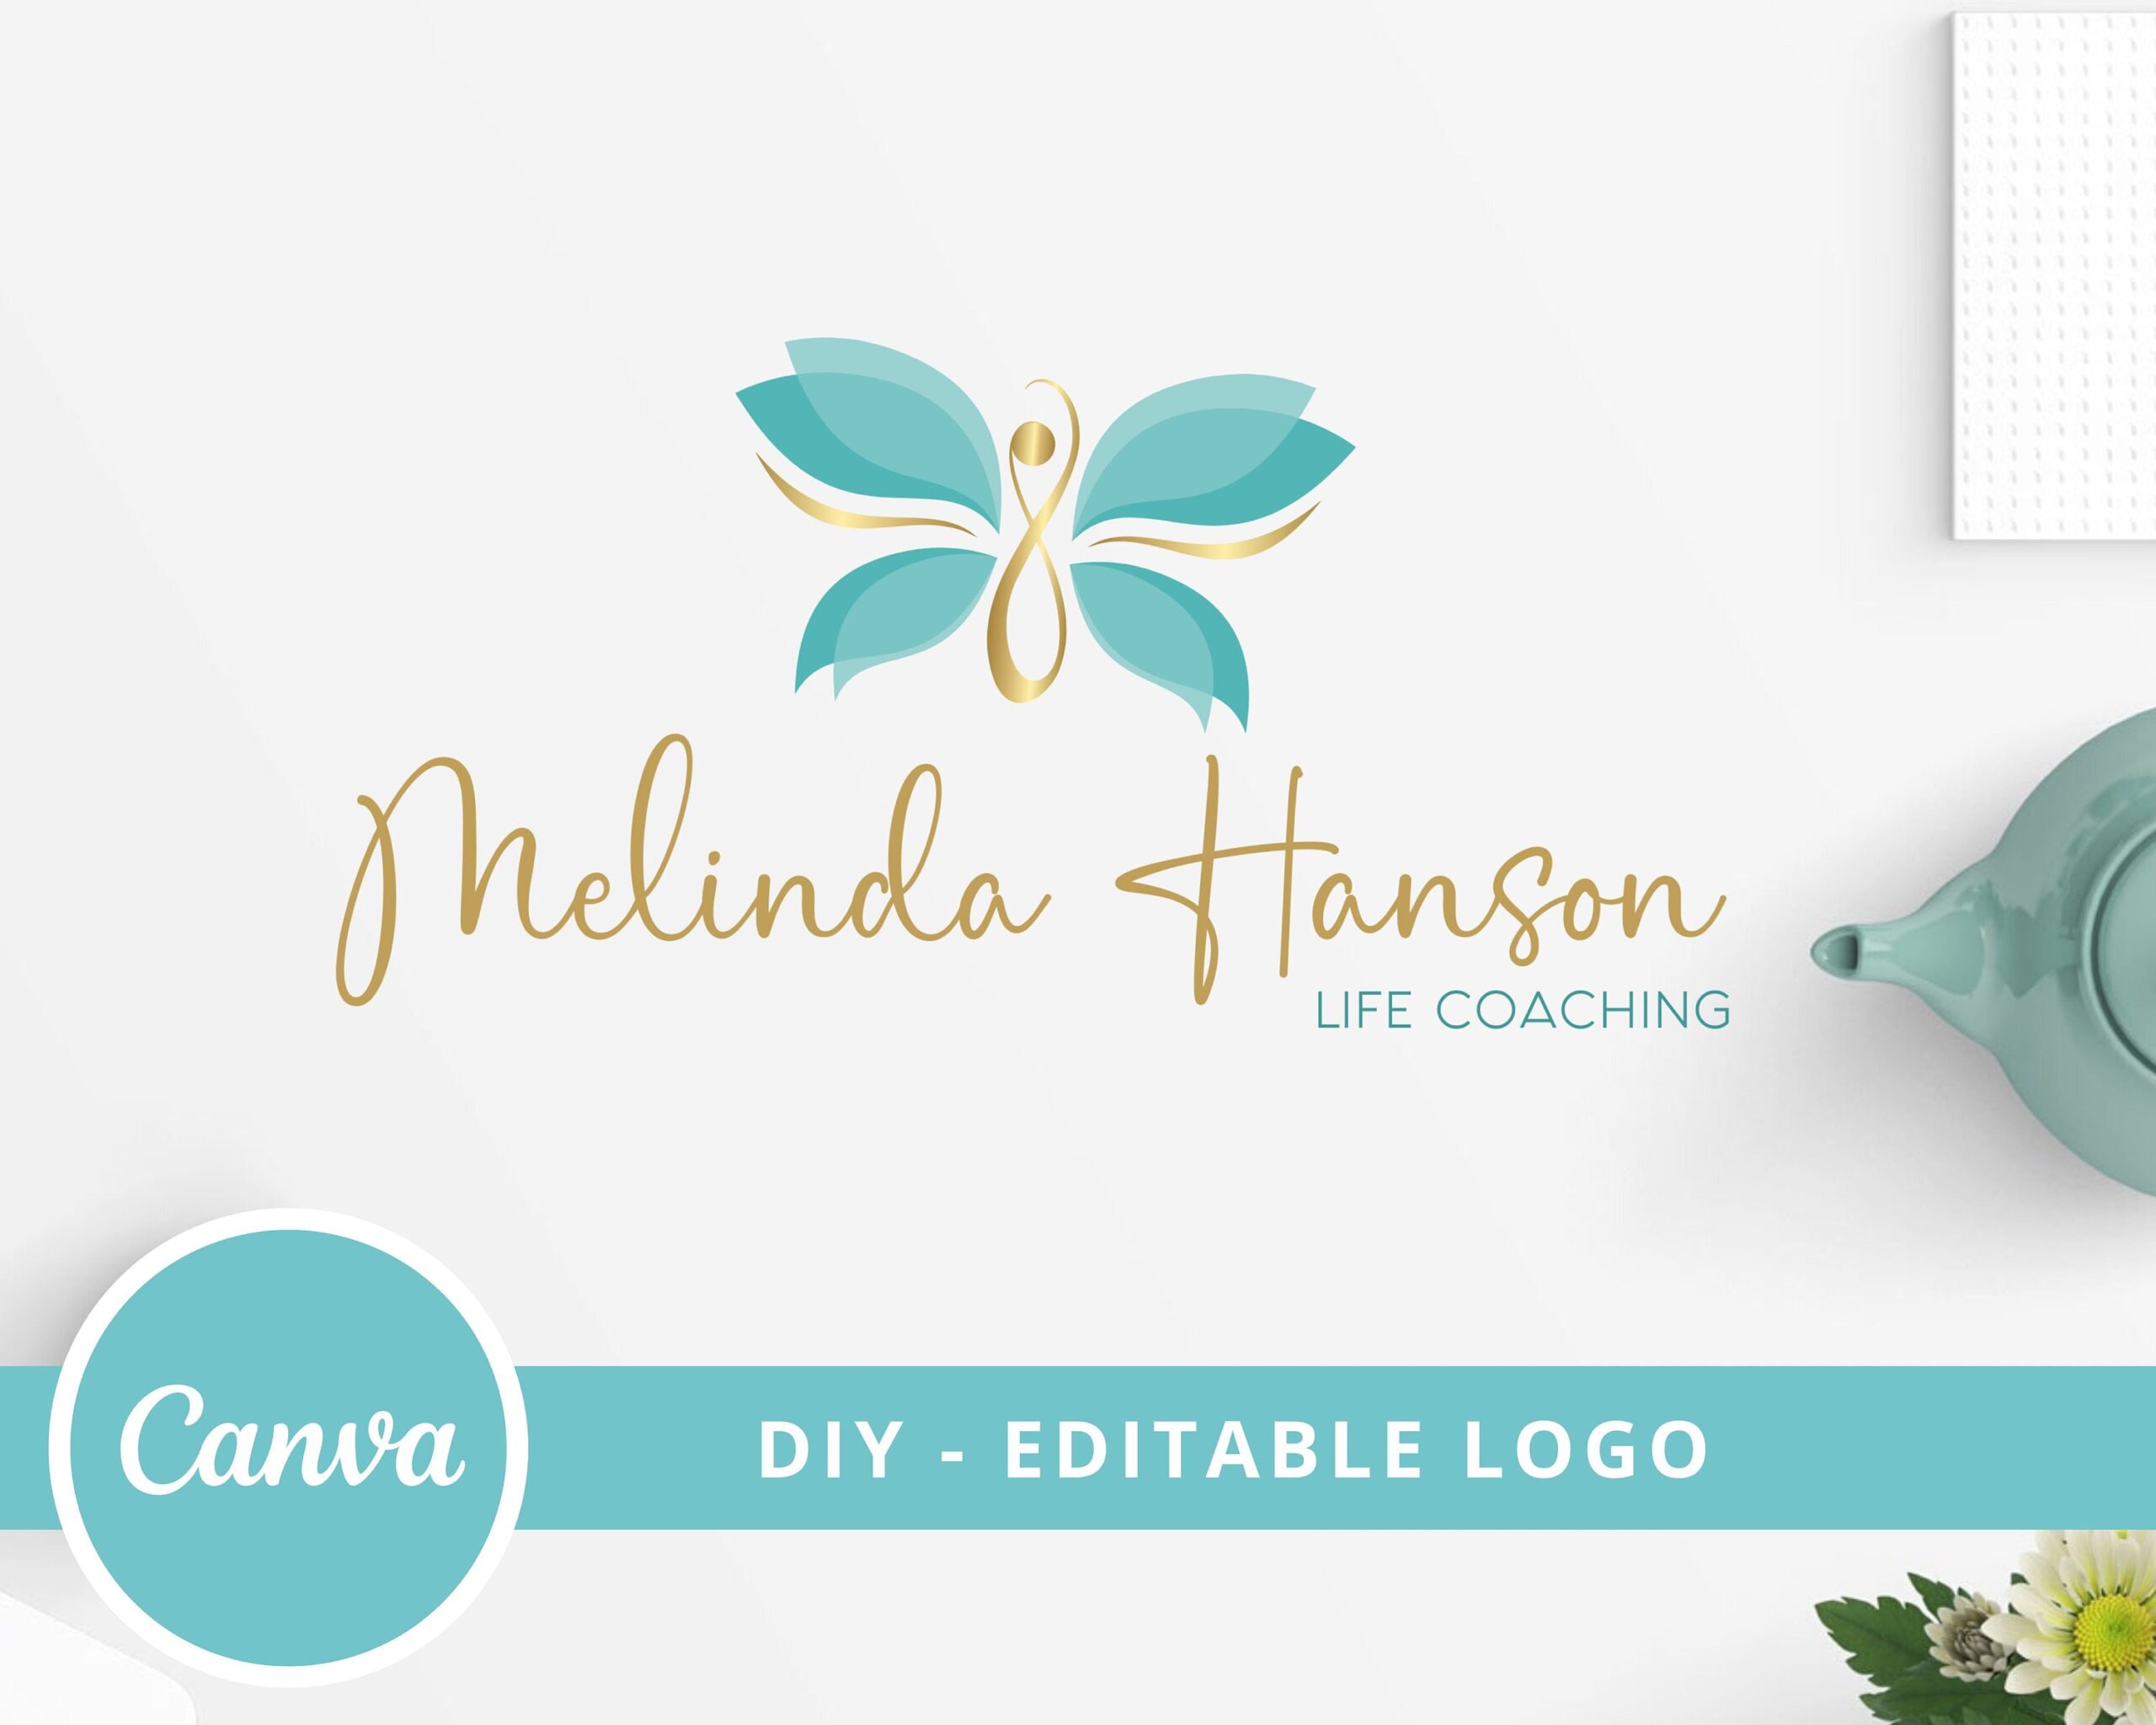 DIY Logo Design - Infinity Butterfly Teal Green Light, Editable Spiritual Logo Template, Yoga Logo, Wellness Life Coaching, Instant Access